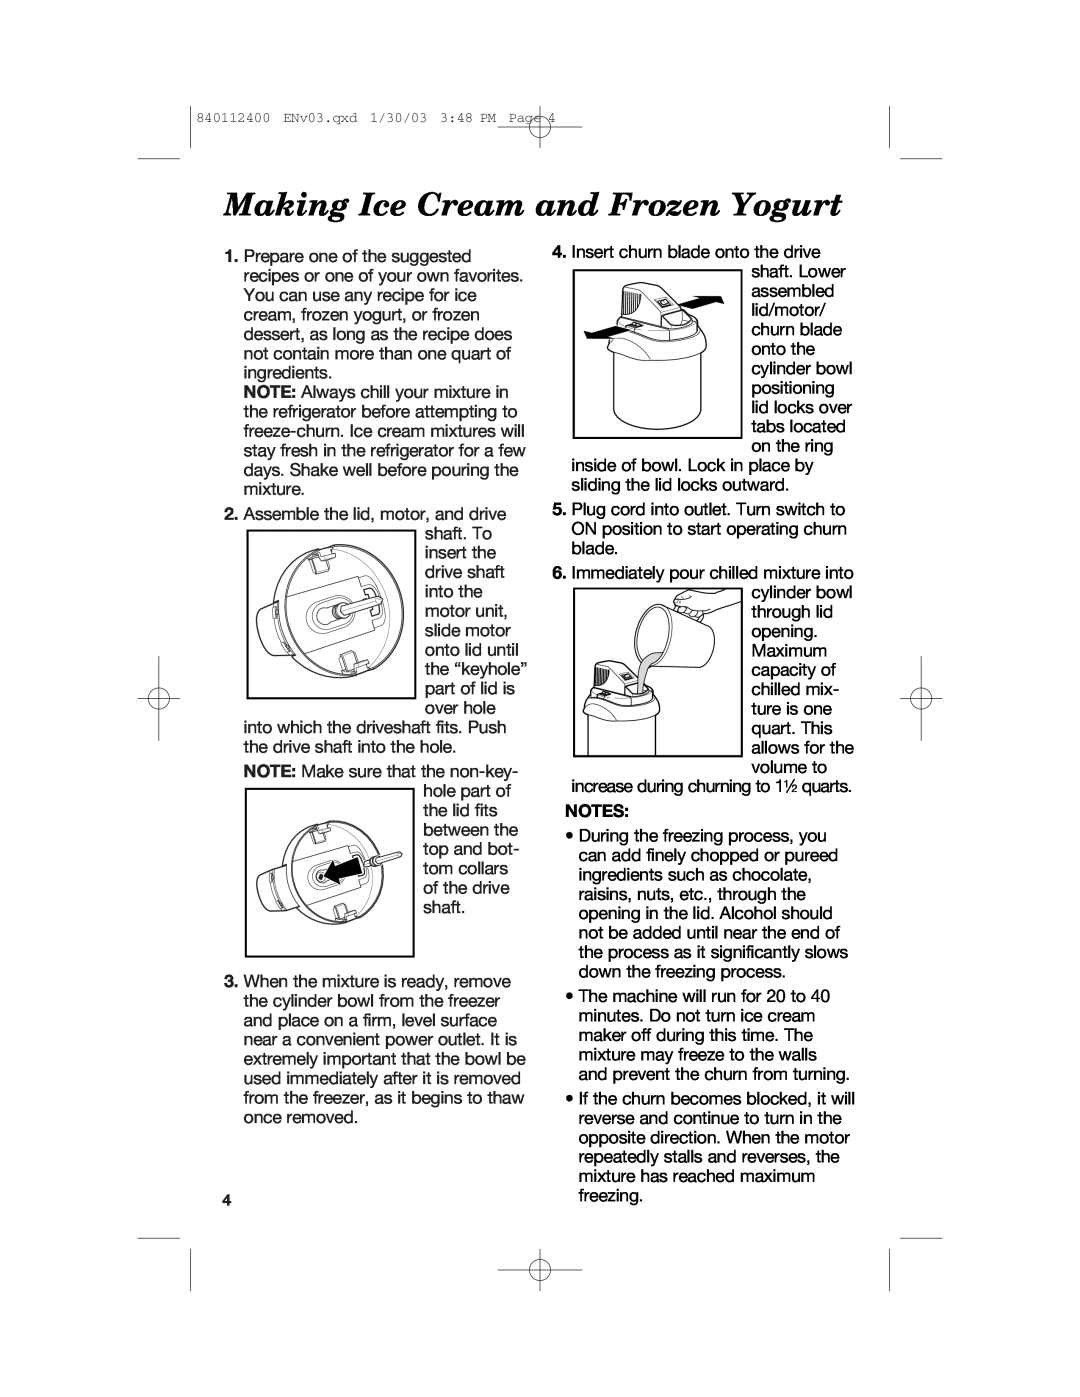 Hamilton Beach 68120 manual Making Ice Cream and Frozen Yogurt 